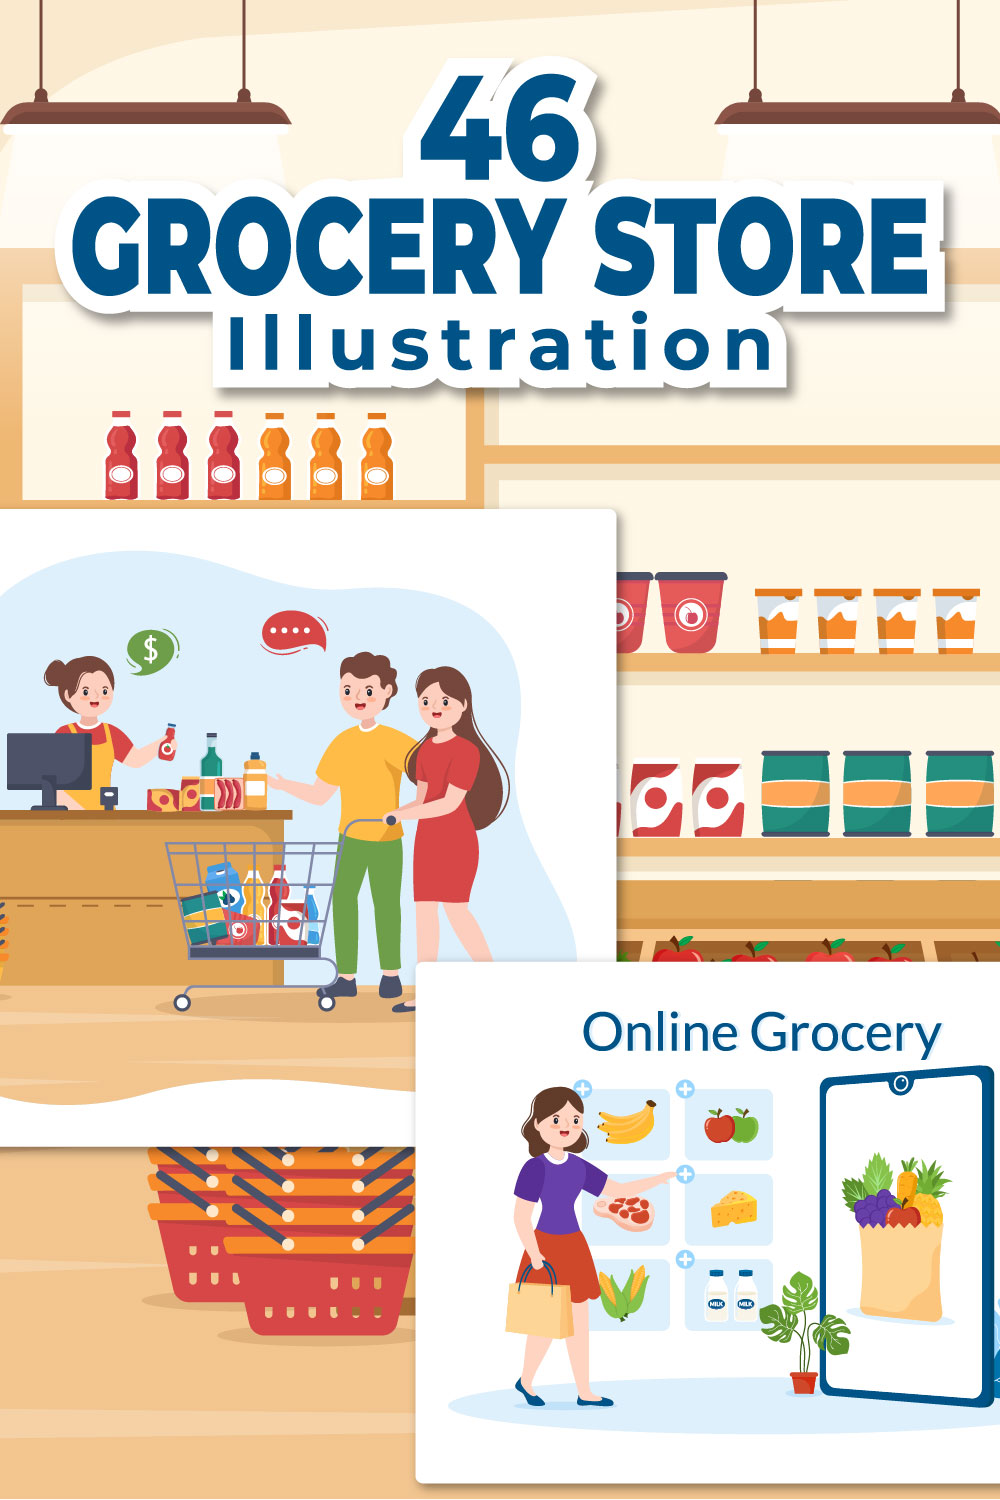 Grocery Store or Supermarket Illustration pinterest image.